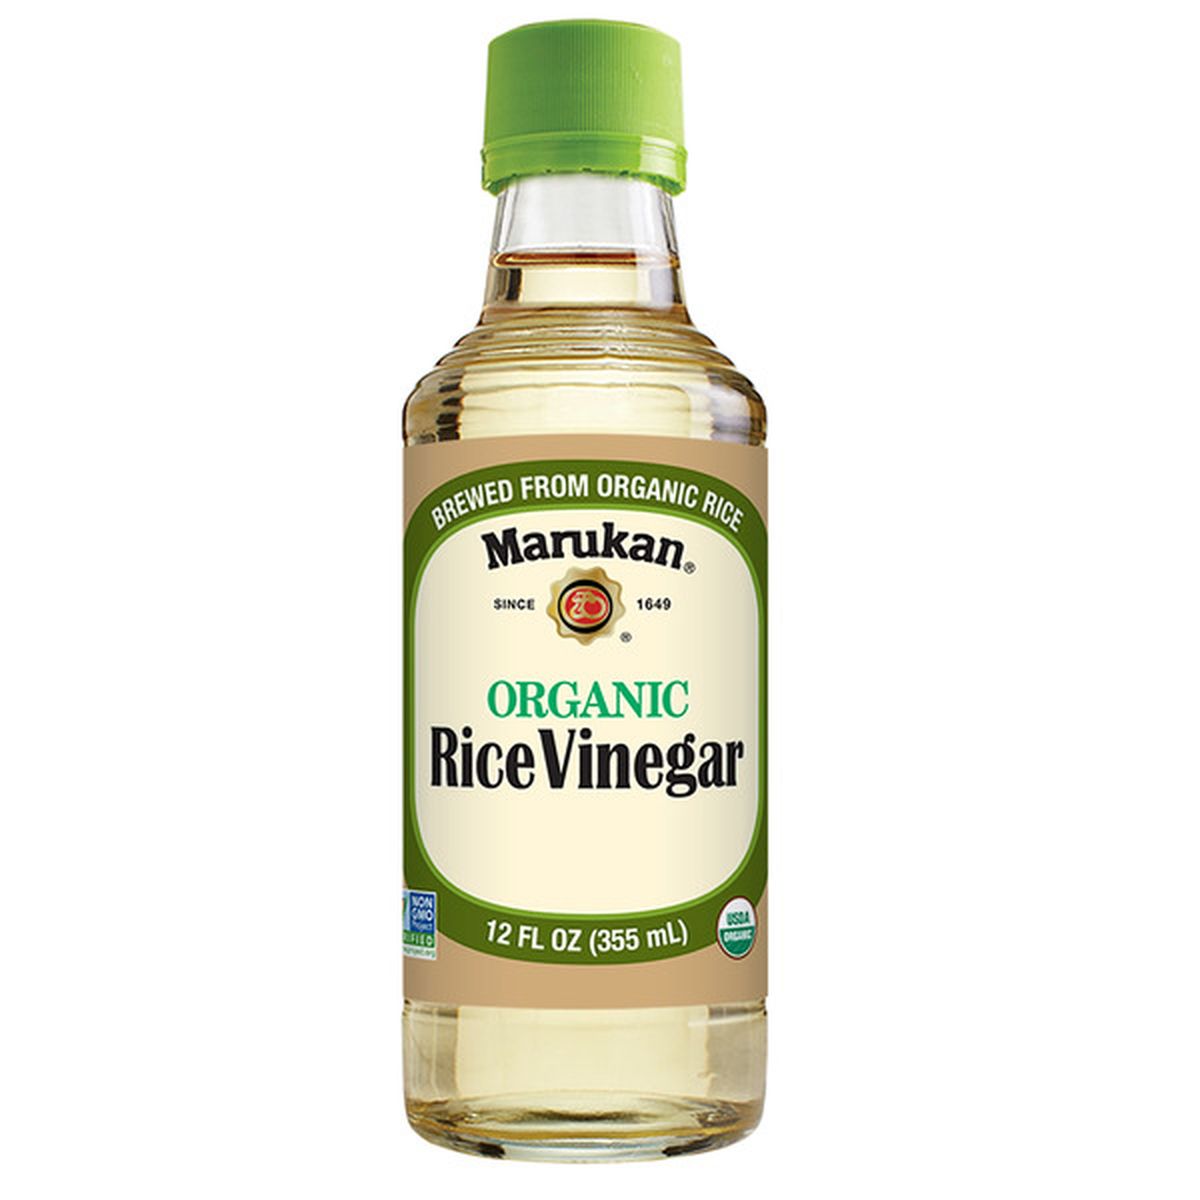 of rice vinegar